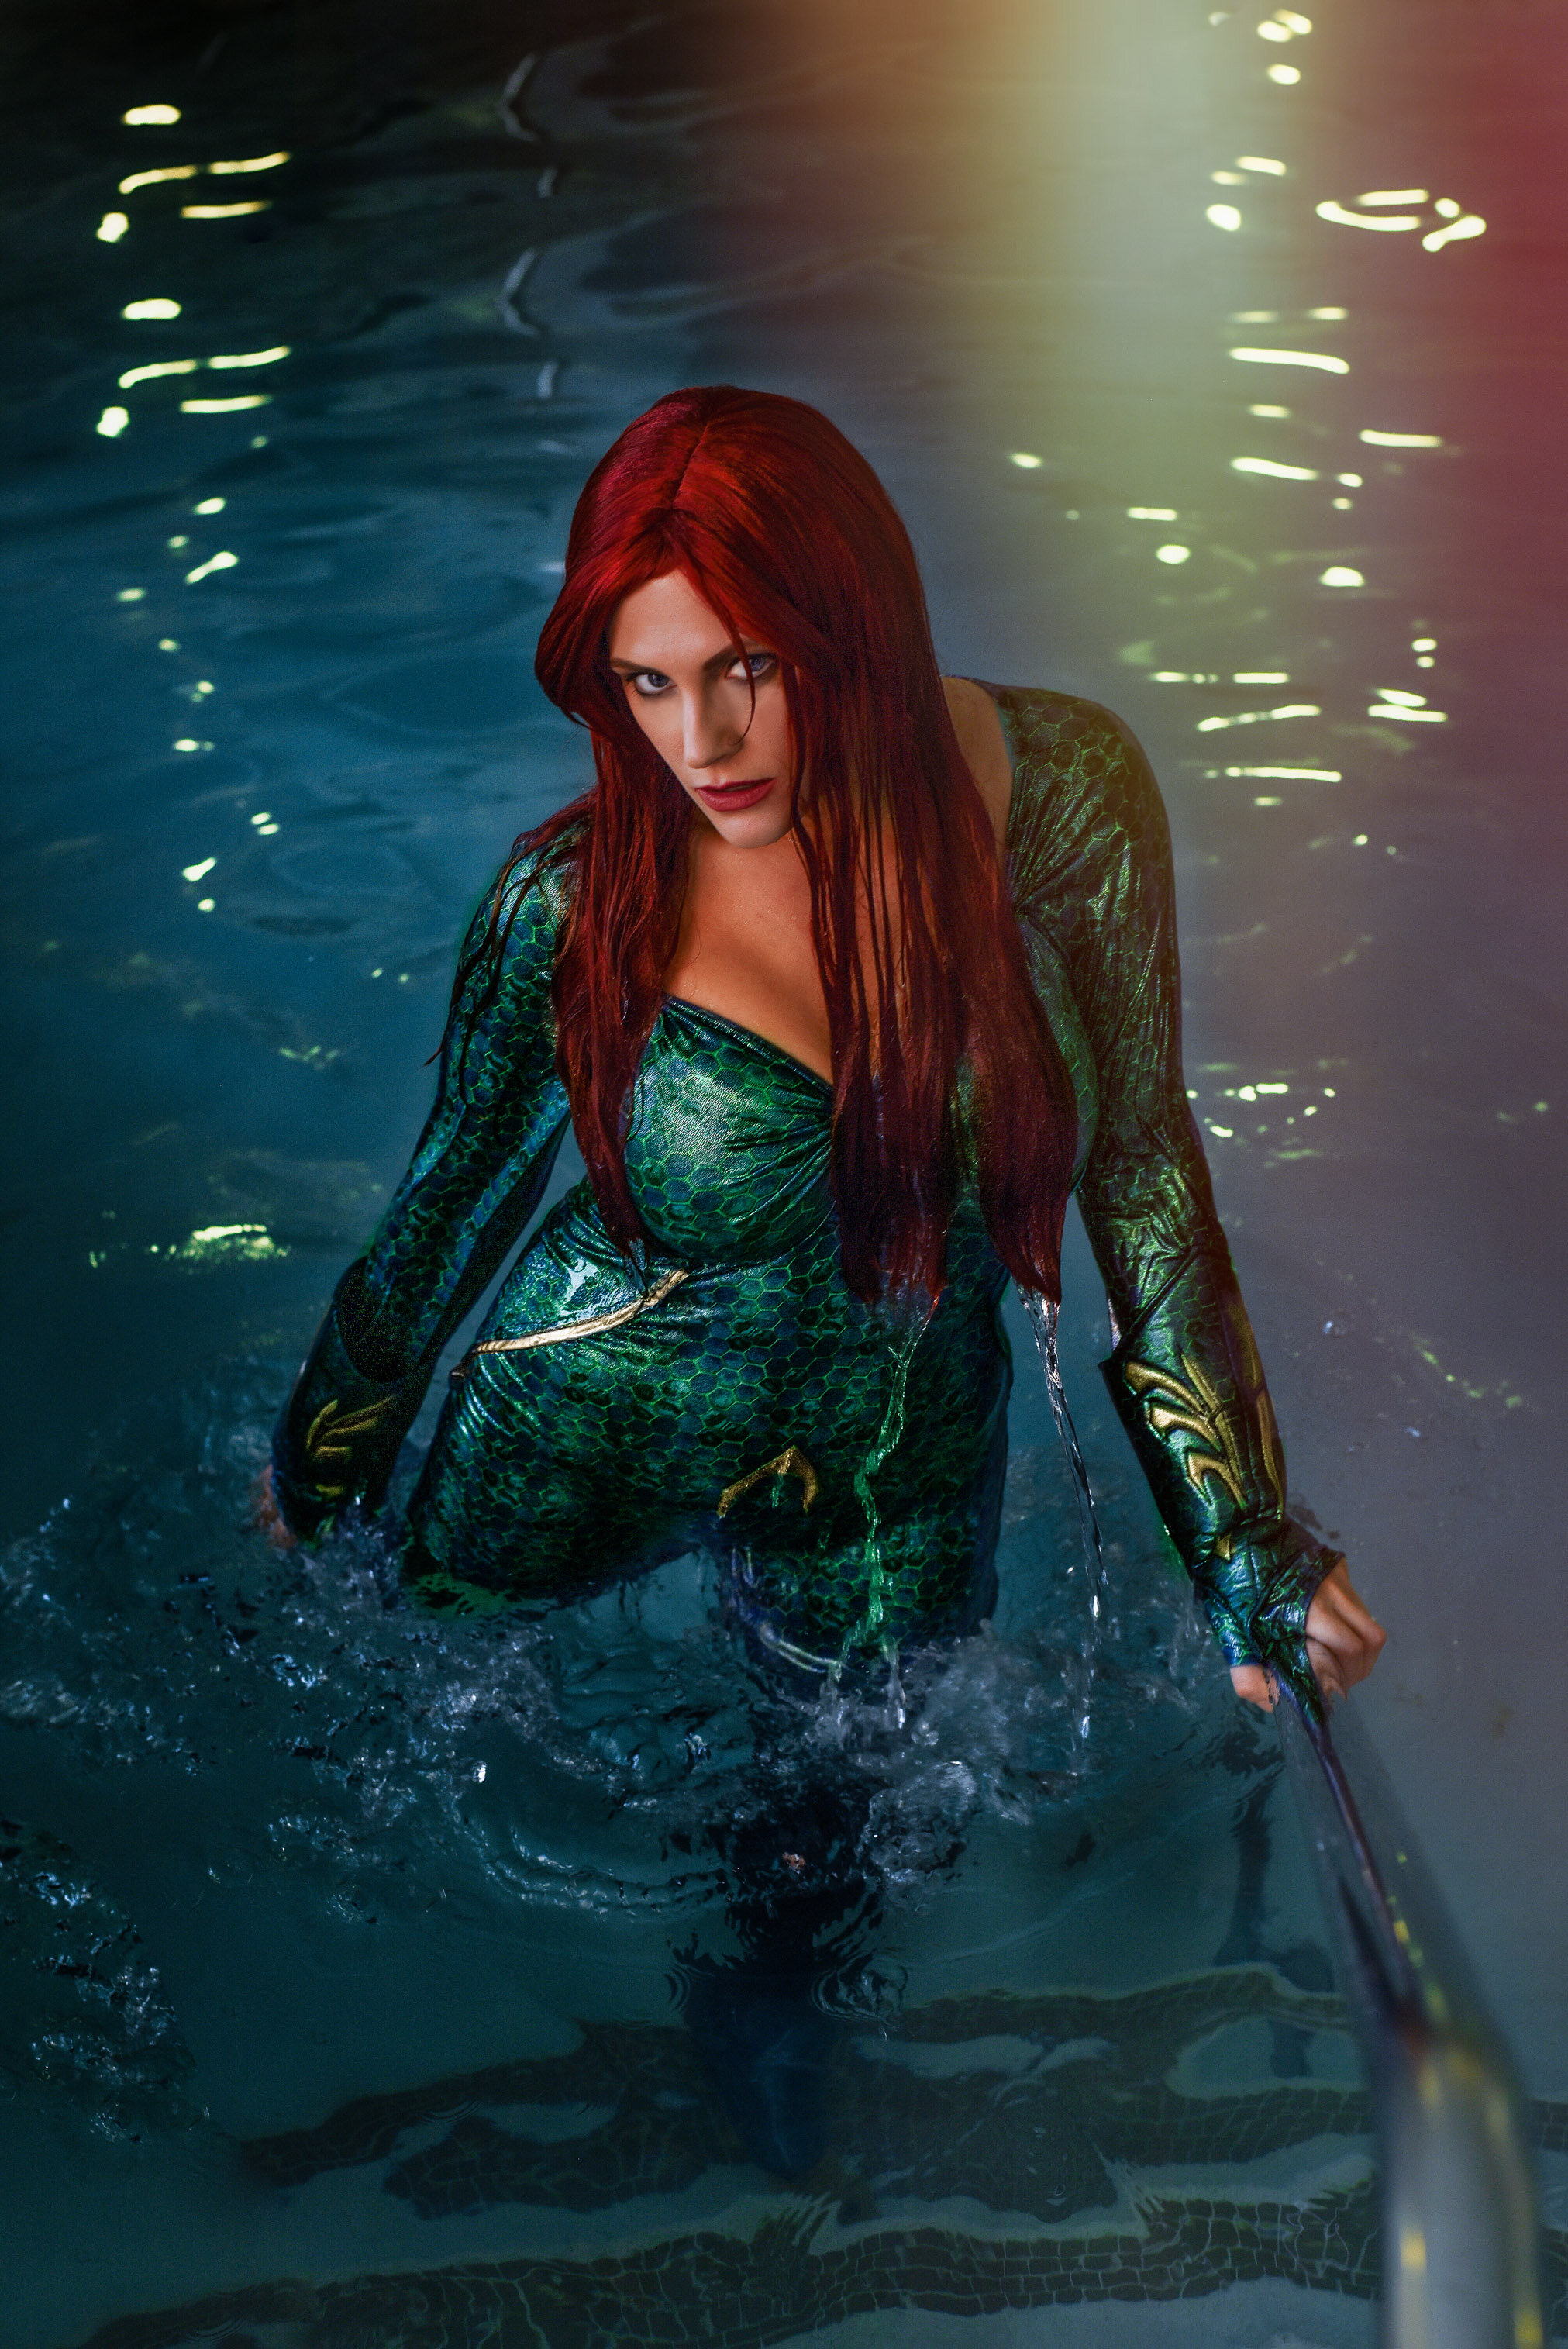 Mera Cosplay from Aquaman - Lorraine Toth Cosplay Model